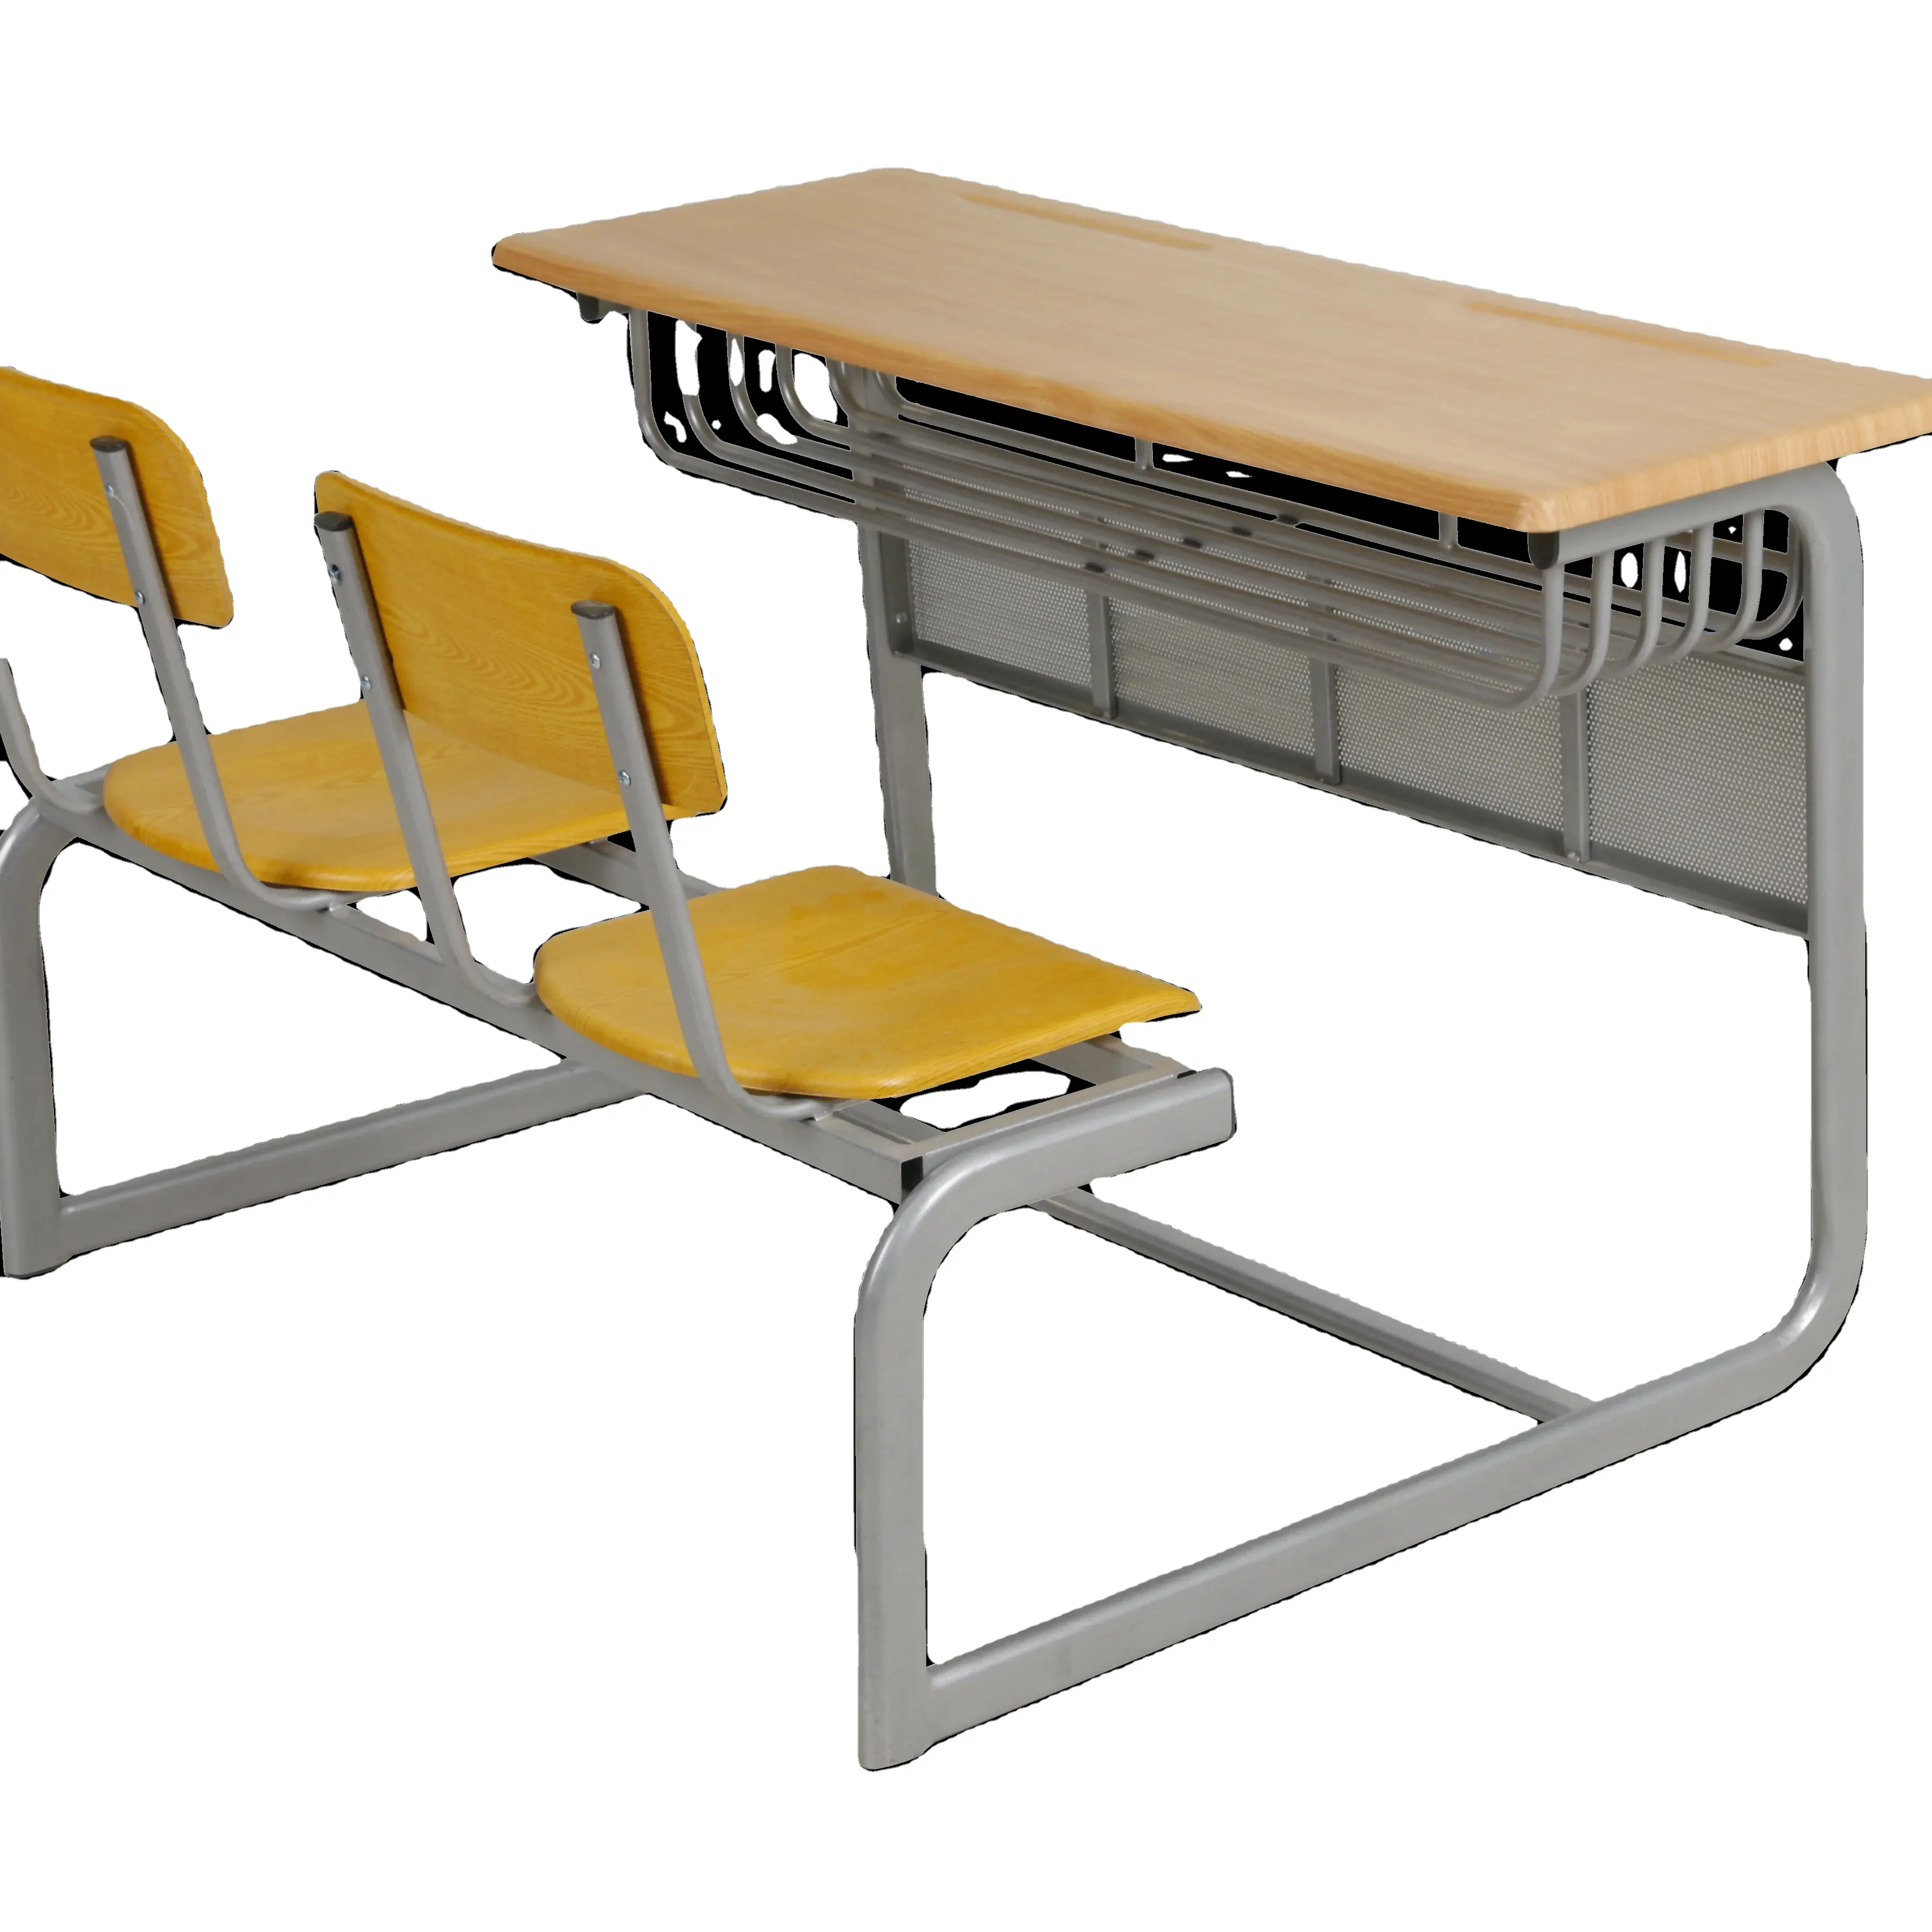 Single metal MDF modern comfortable steel student classroom desk and chair school furniture equipment